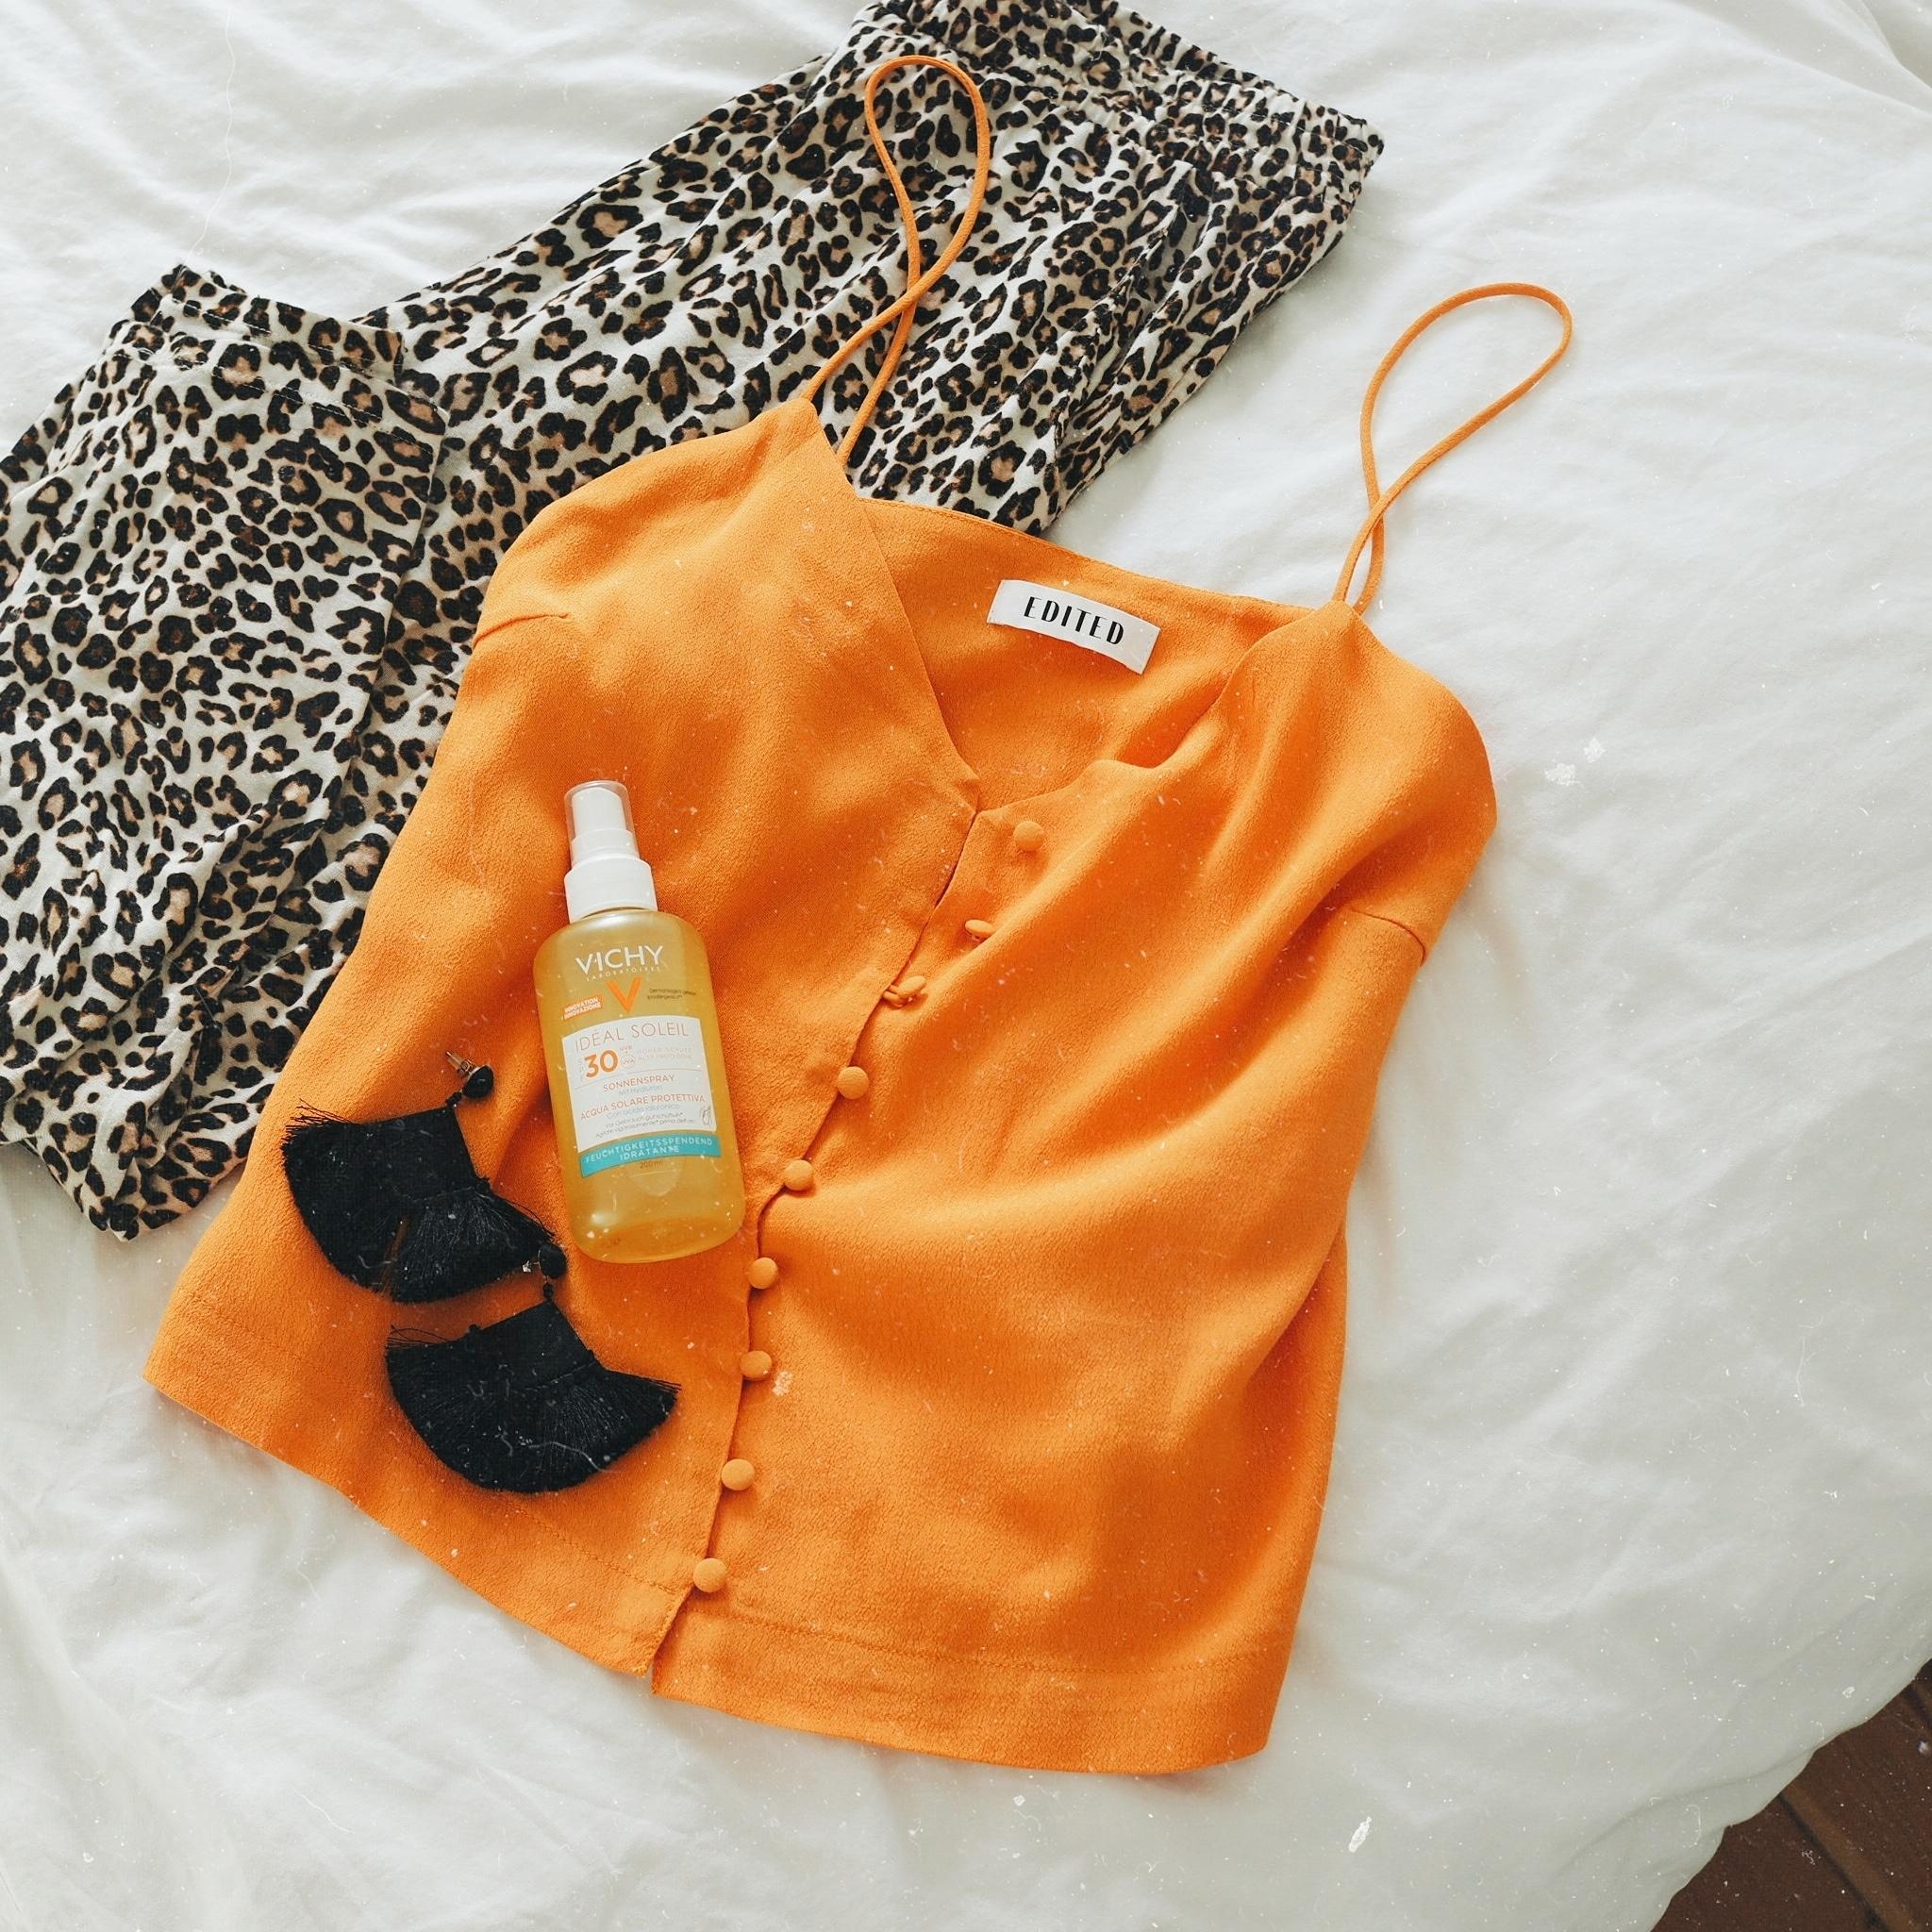 Packing for vacation ☀️ #sonnencreme #vichy #urlaub #beauty #leolove #fashion #orange 